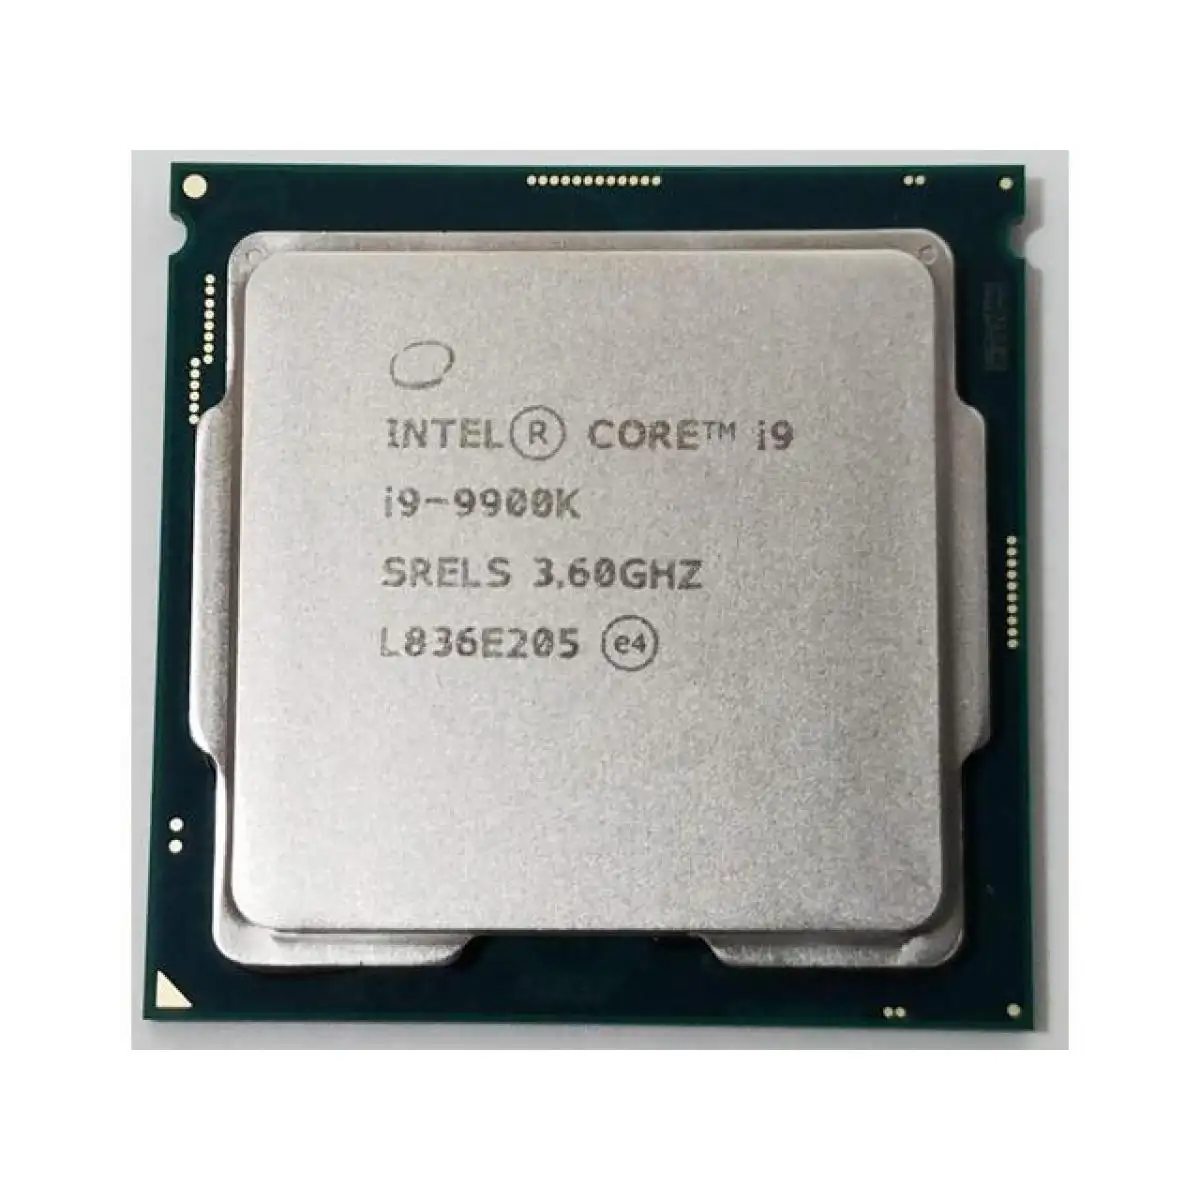 Intel Core i9-9900K 8 Cores up to 5.0 GHz Turbo unlocked LGA1151 300 Series 95W Desktop Processor